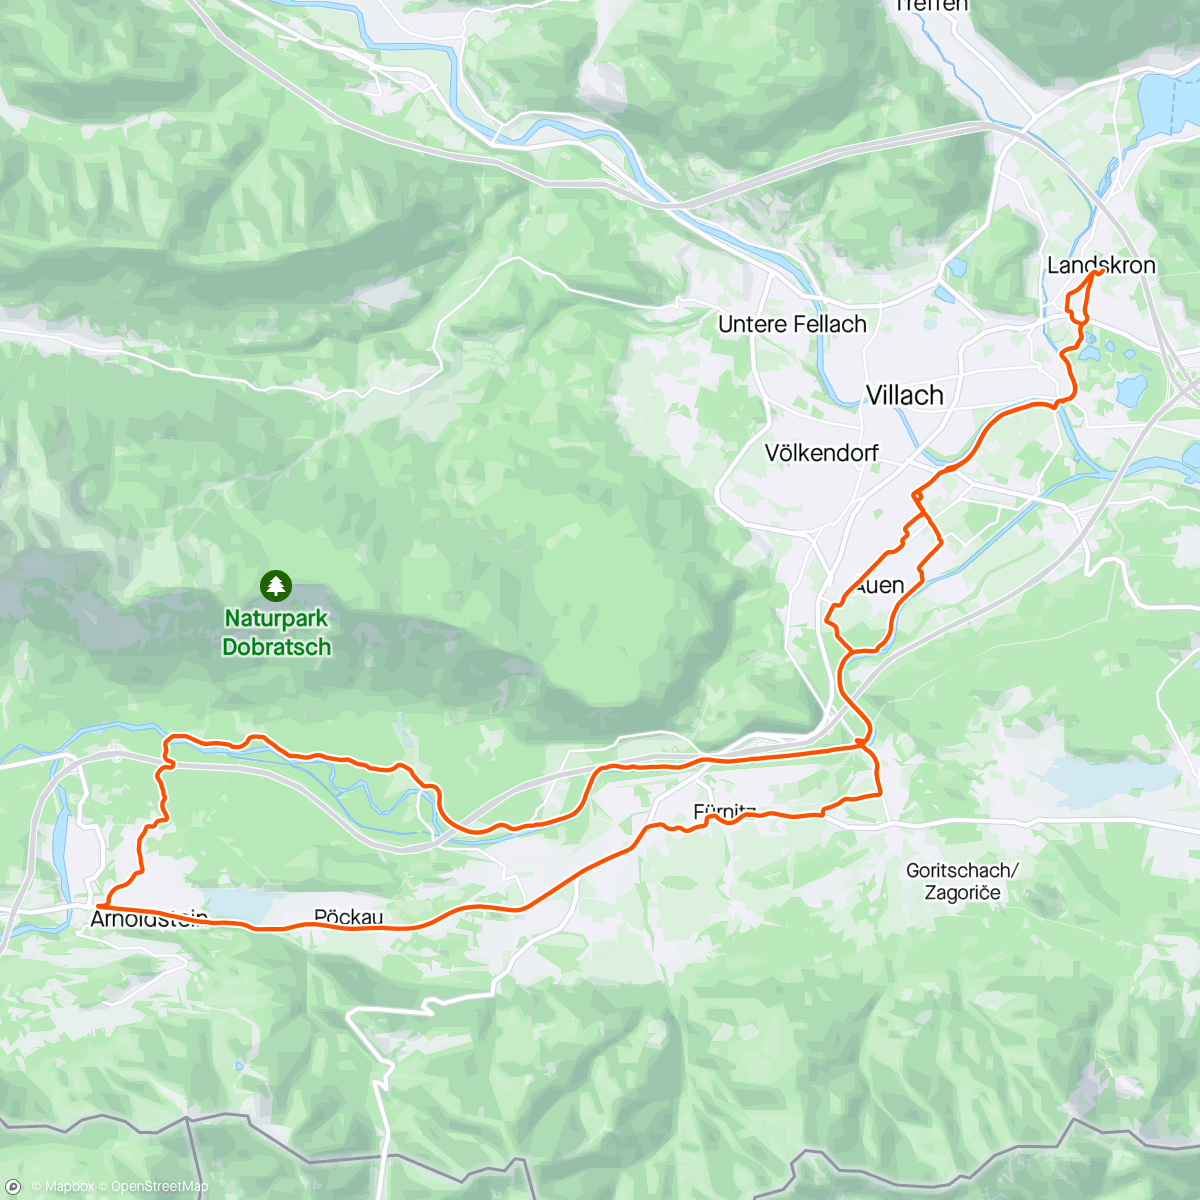 「Radfahrt am Abend」活動的地圖